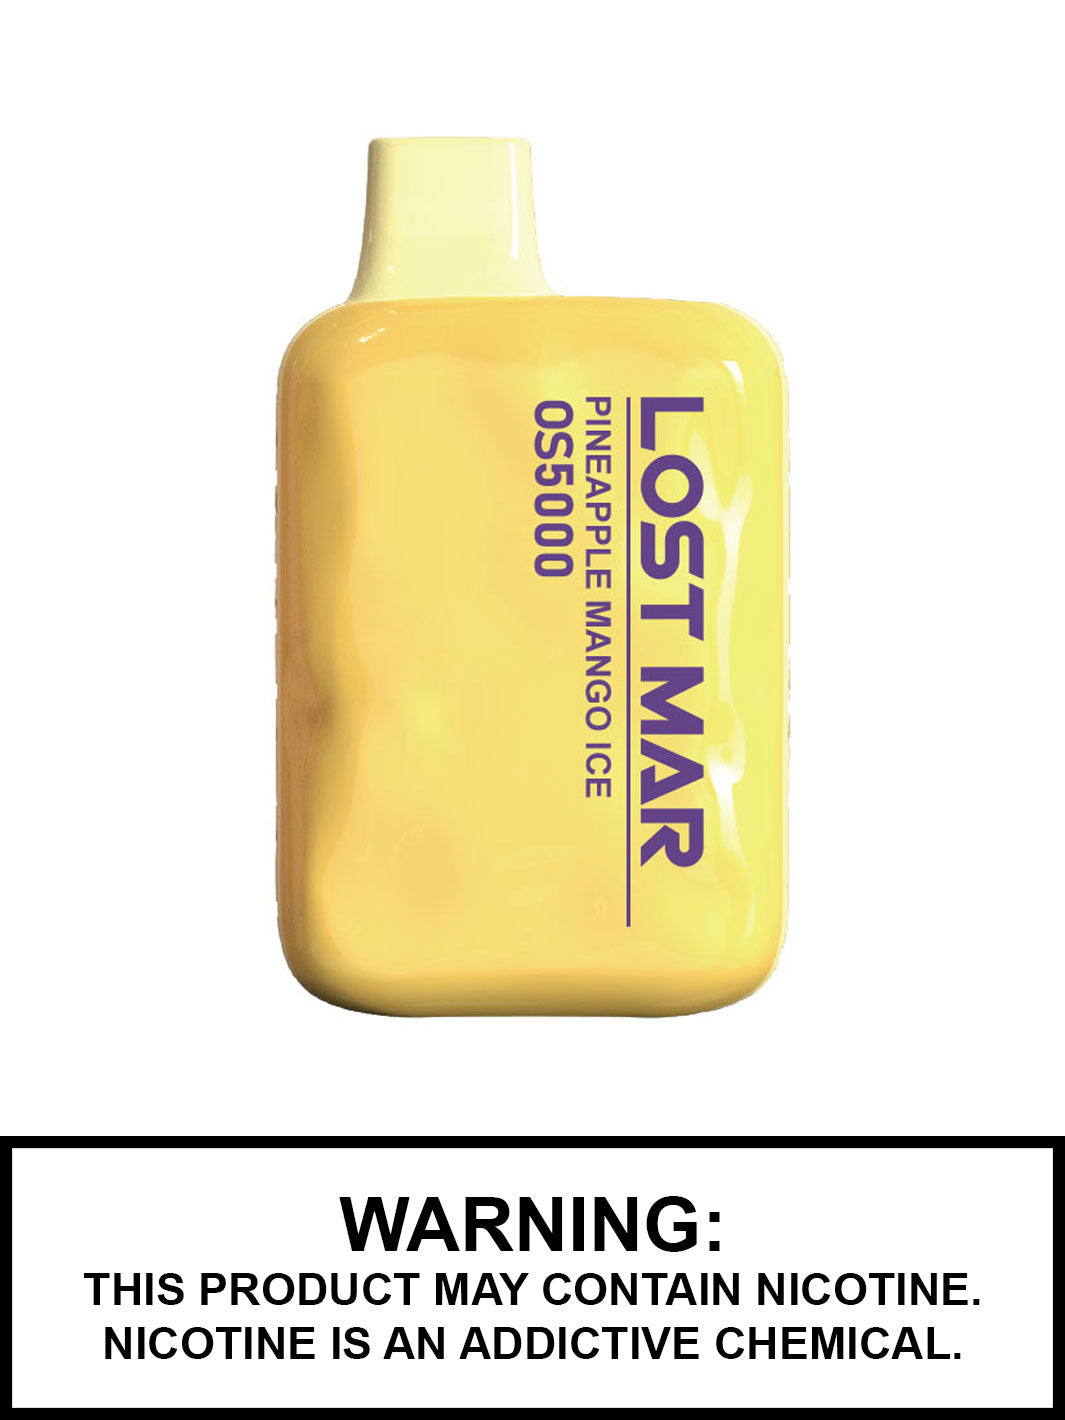 Lost Mary OS5000 Disposable Vape, Lost Mary Vape, Pineapple Mango Ice Vape Juice, Vape360 Canada